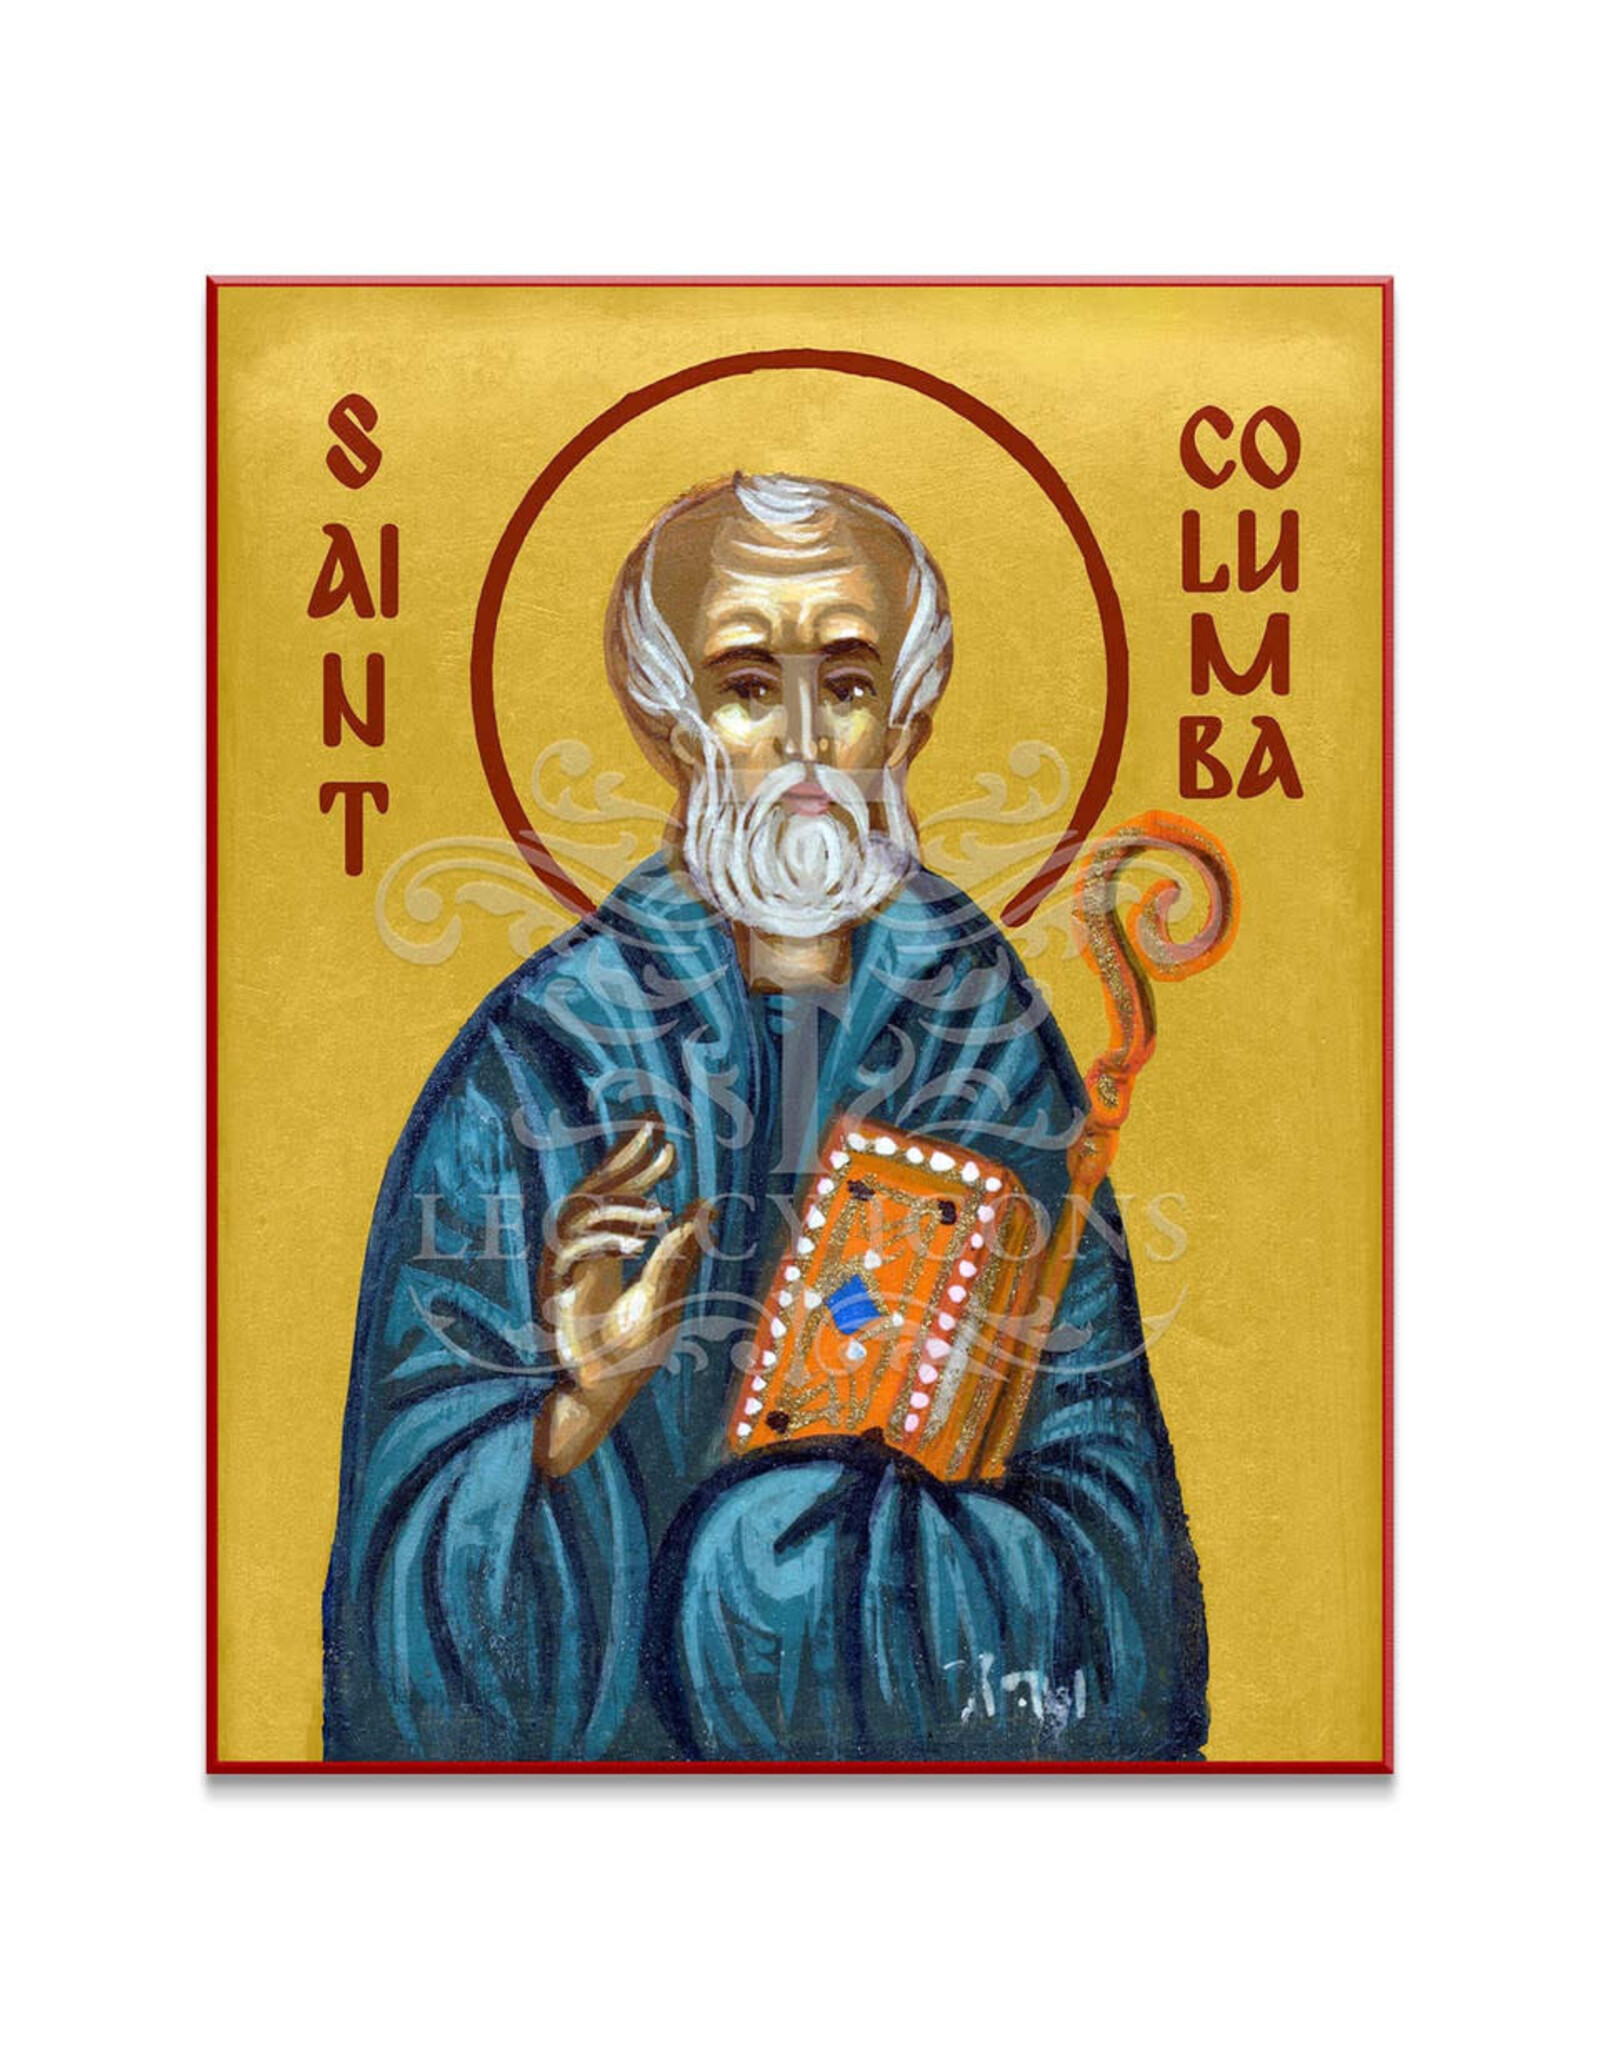 Legacy Icons Icon - St Columba of Iona